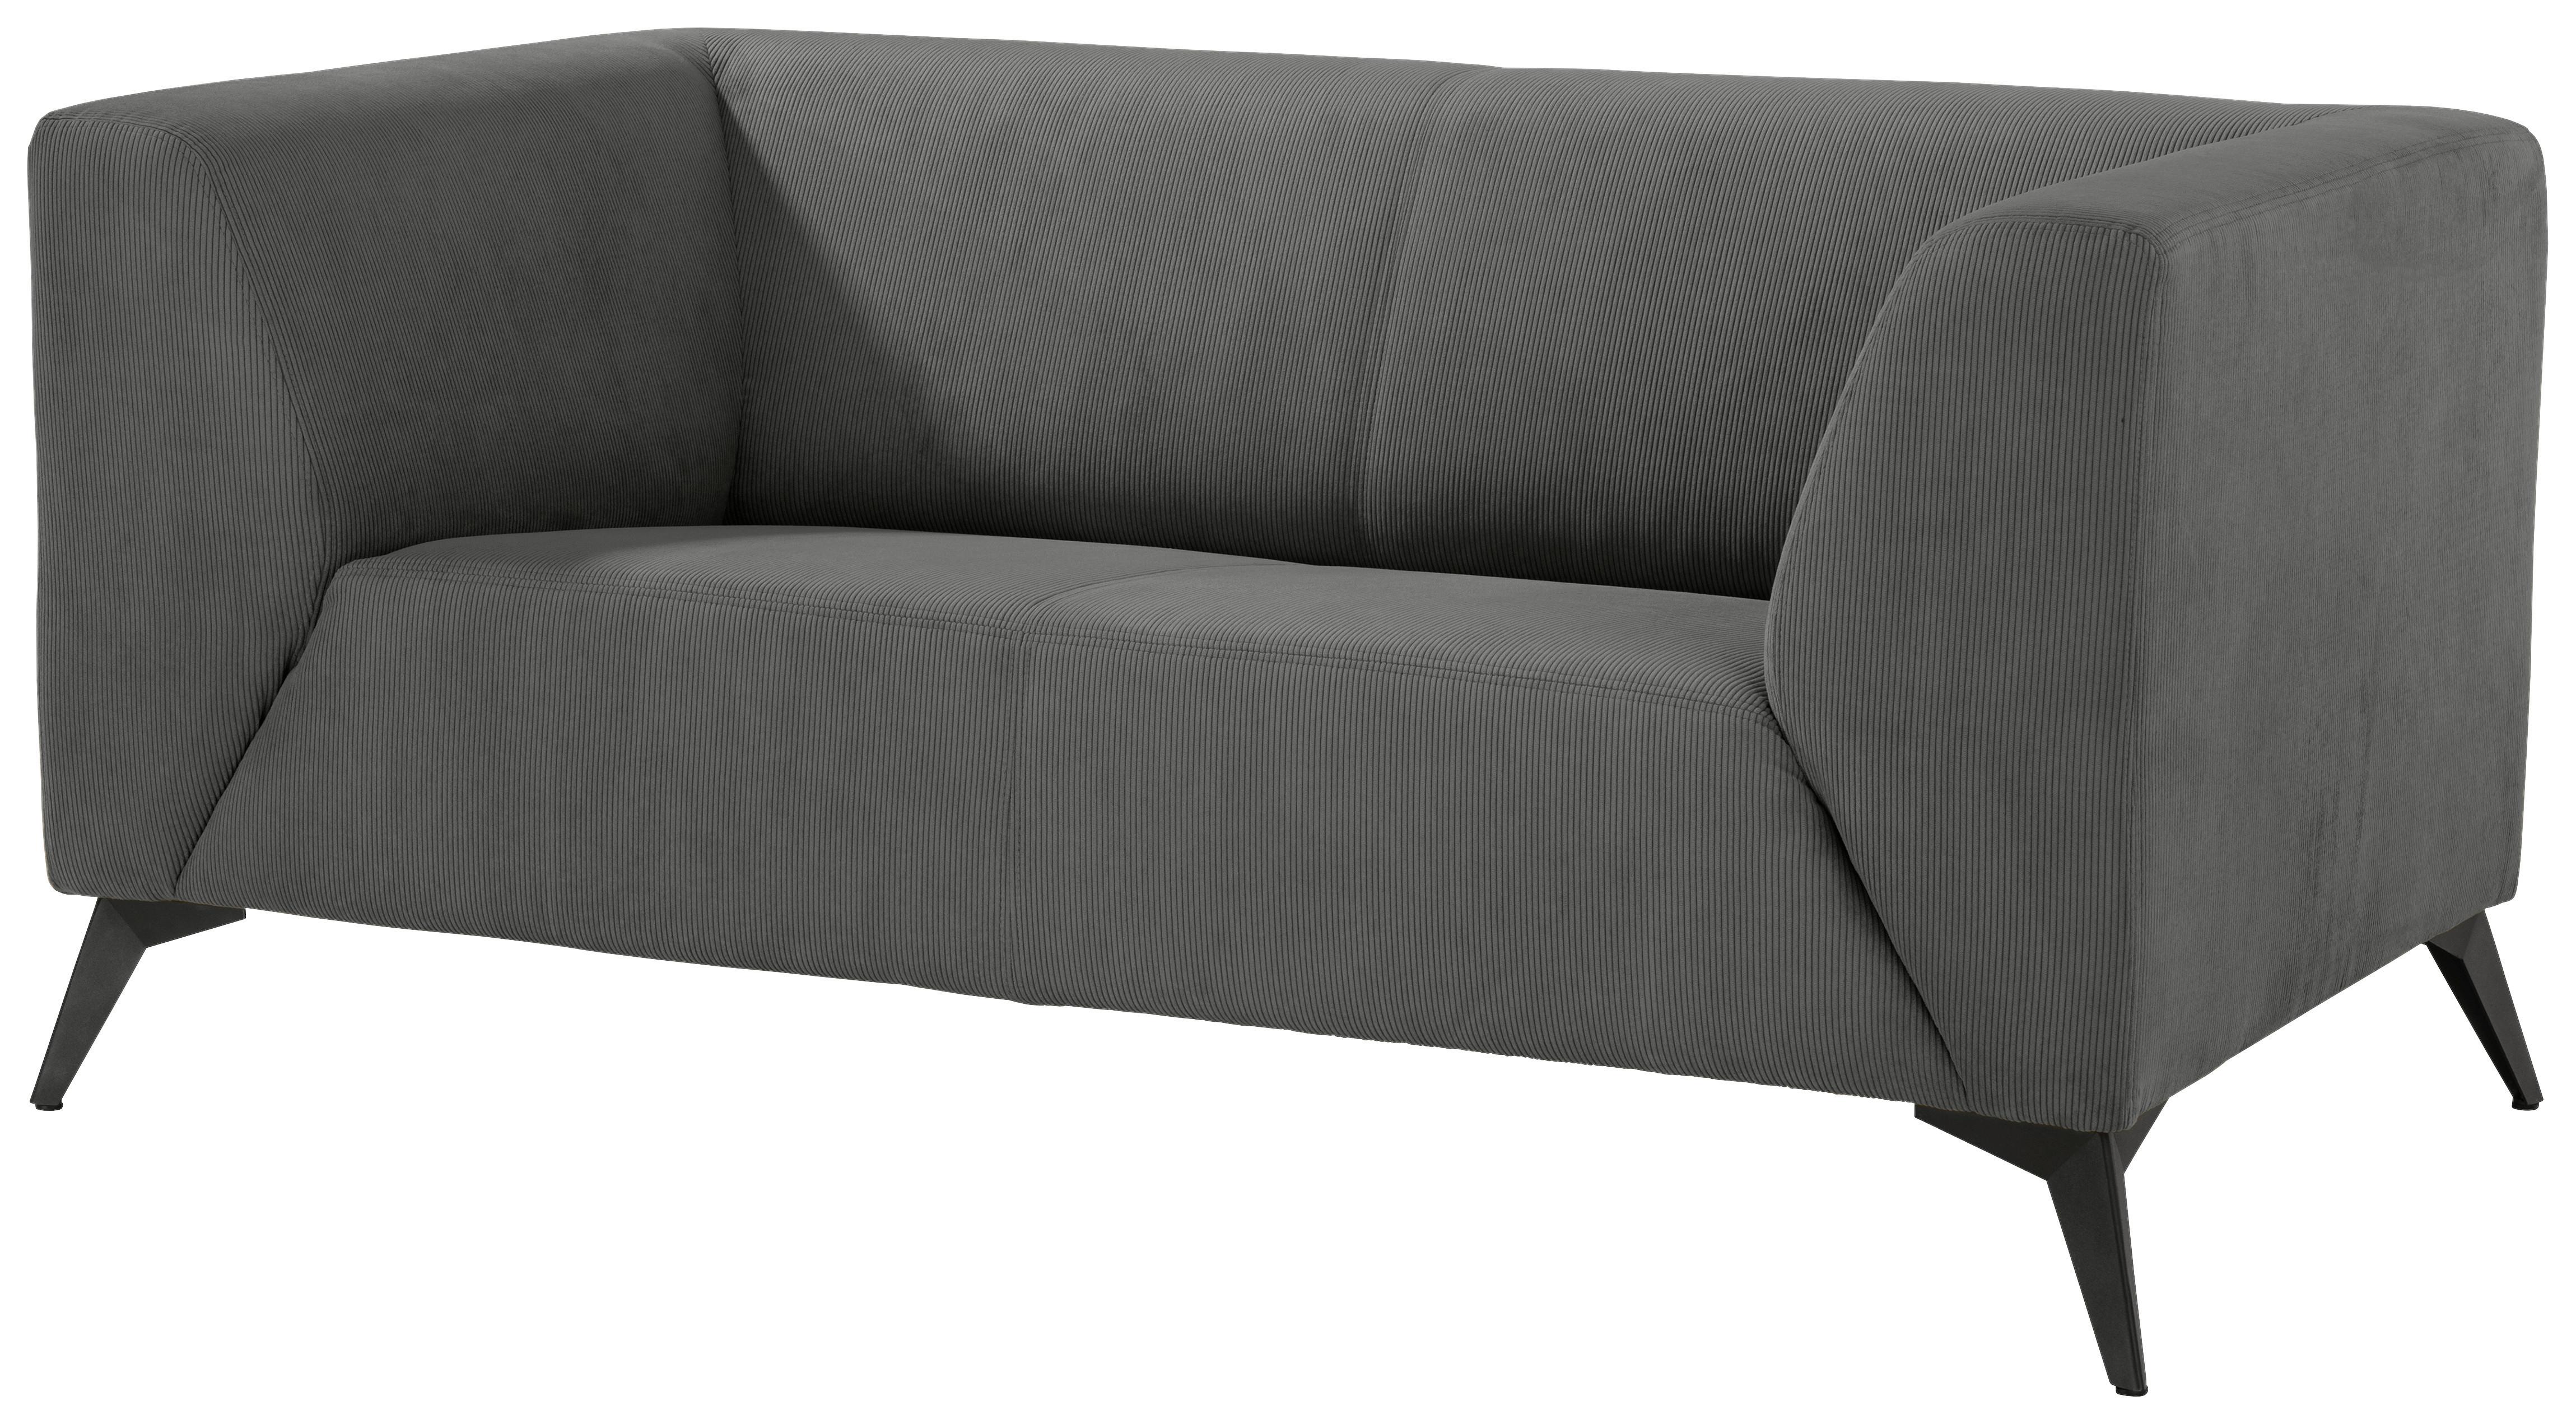 2-Sitzer-Sofa Tubione mit Armlehnen Grau - Schwarz/Grau, MODERN, Holz/Textil (160/71/87cm) - Livetastic